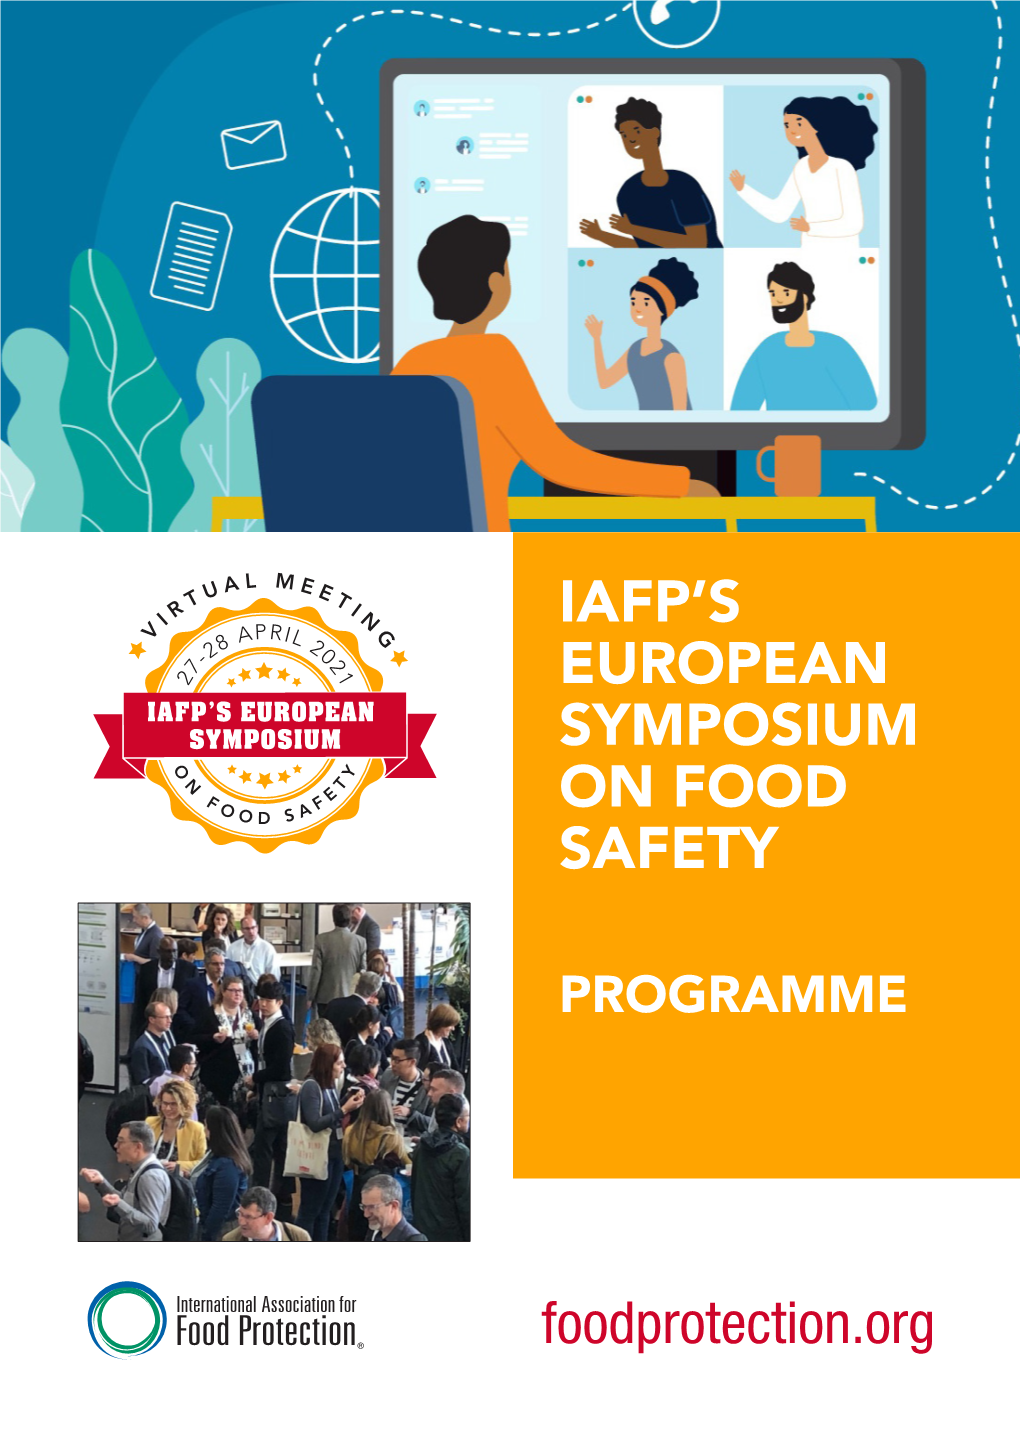 Iafp's European Symposium